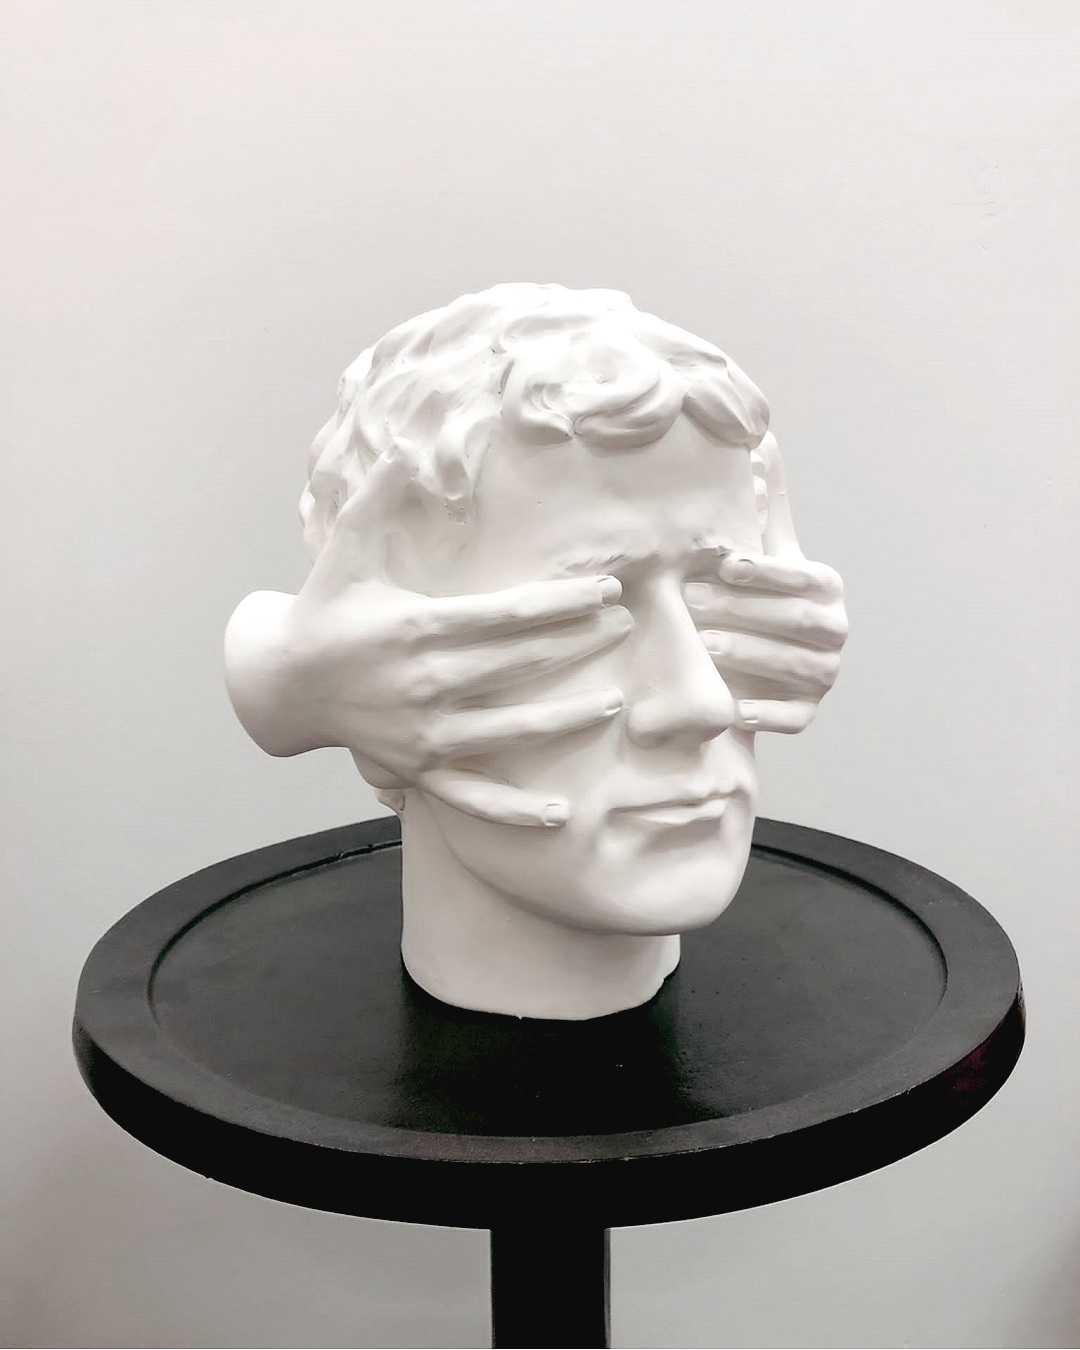 Hands over eye sculpture